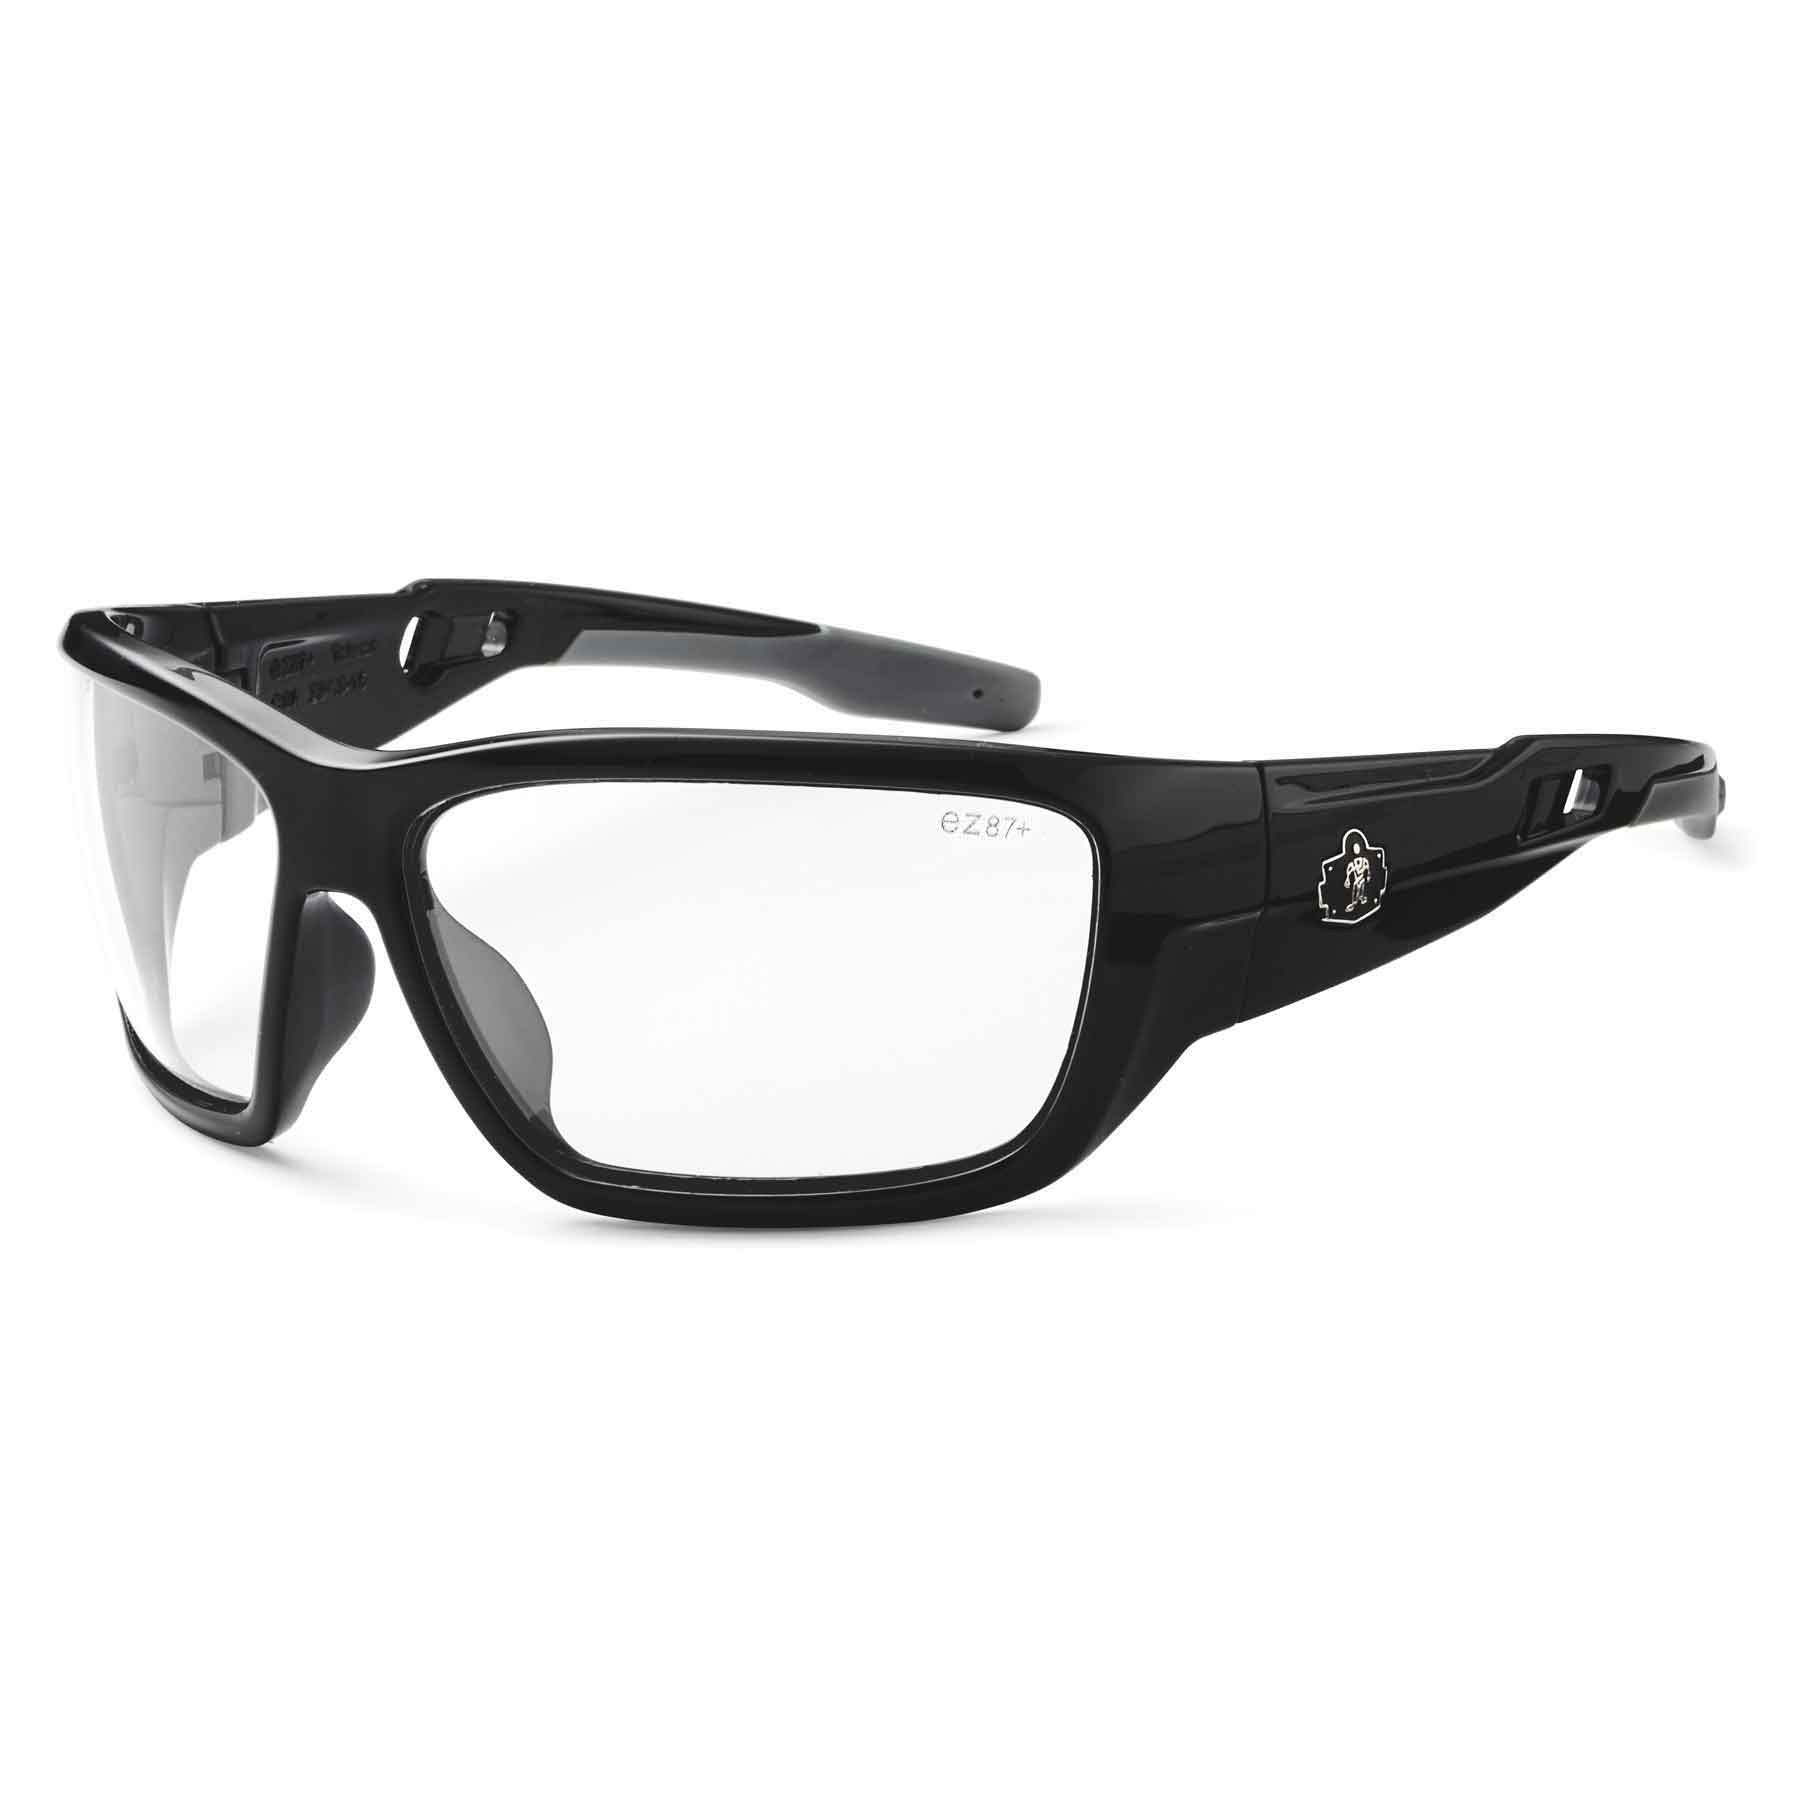 Skullerz Baldr Safety Glasses-eSafety Supplies, Inc